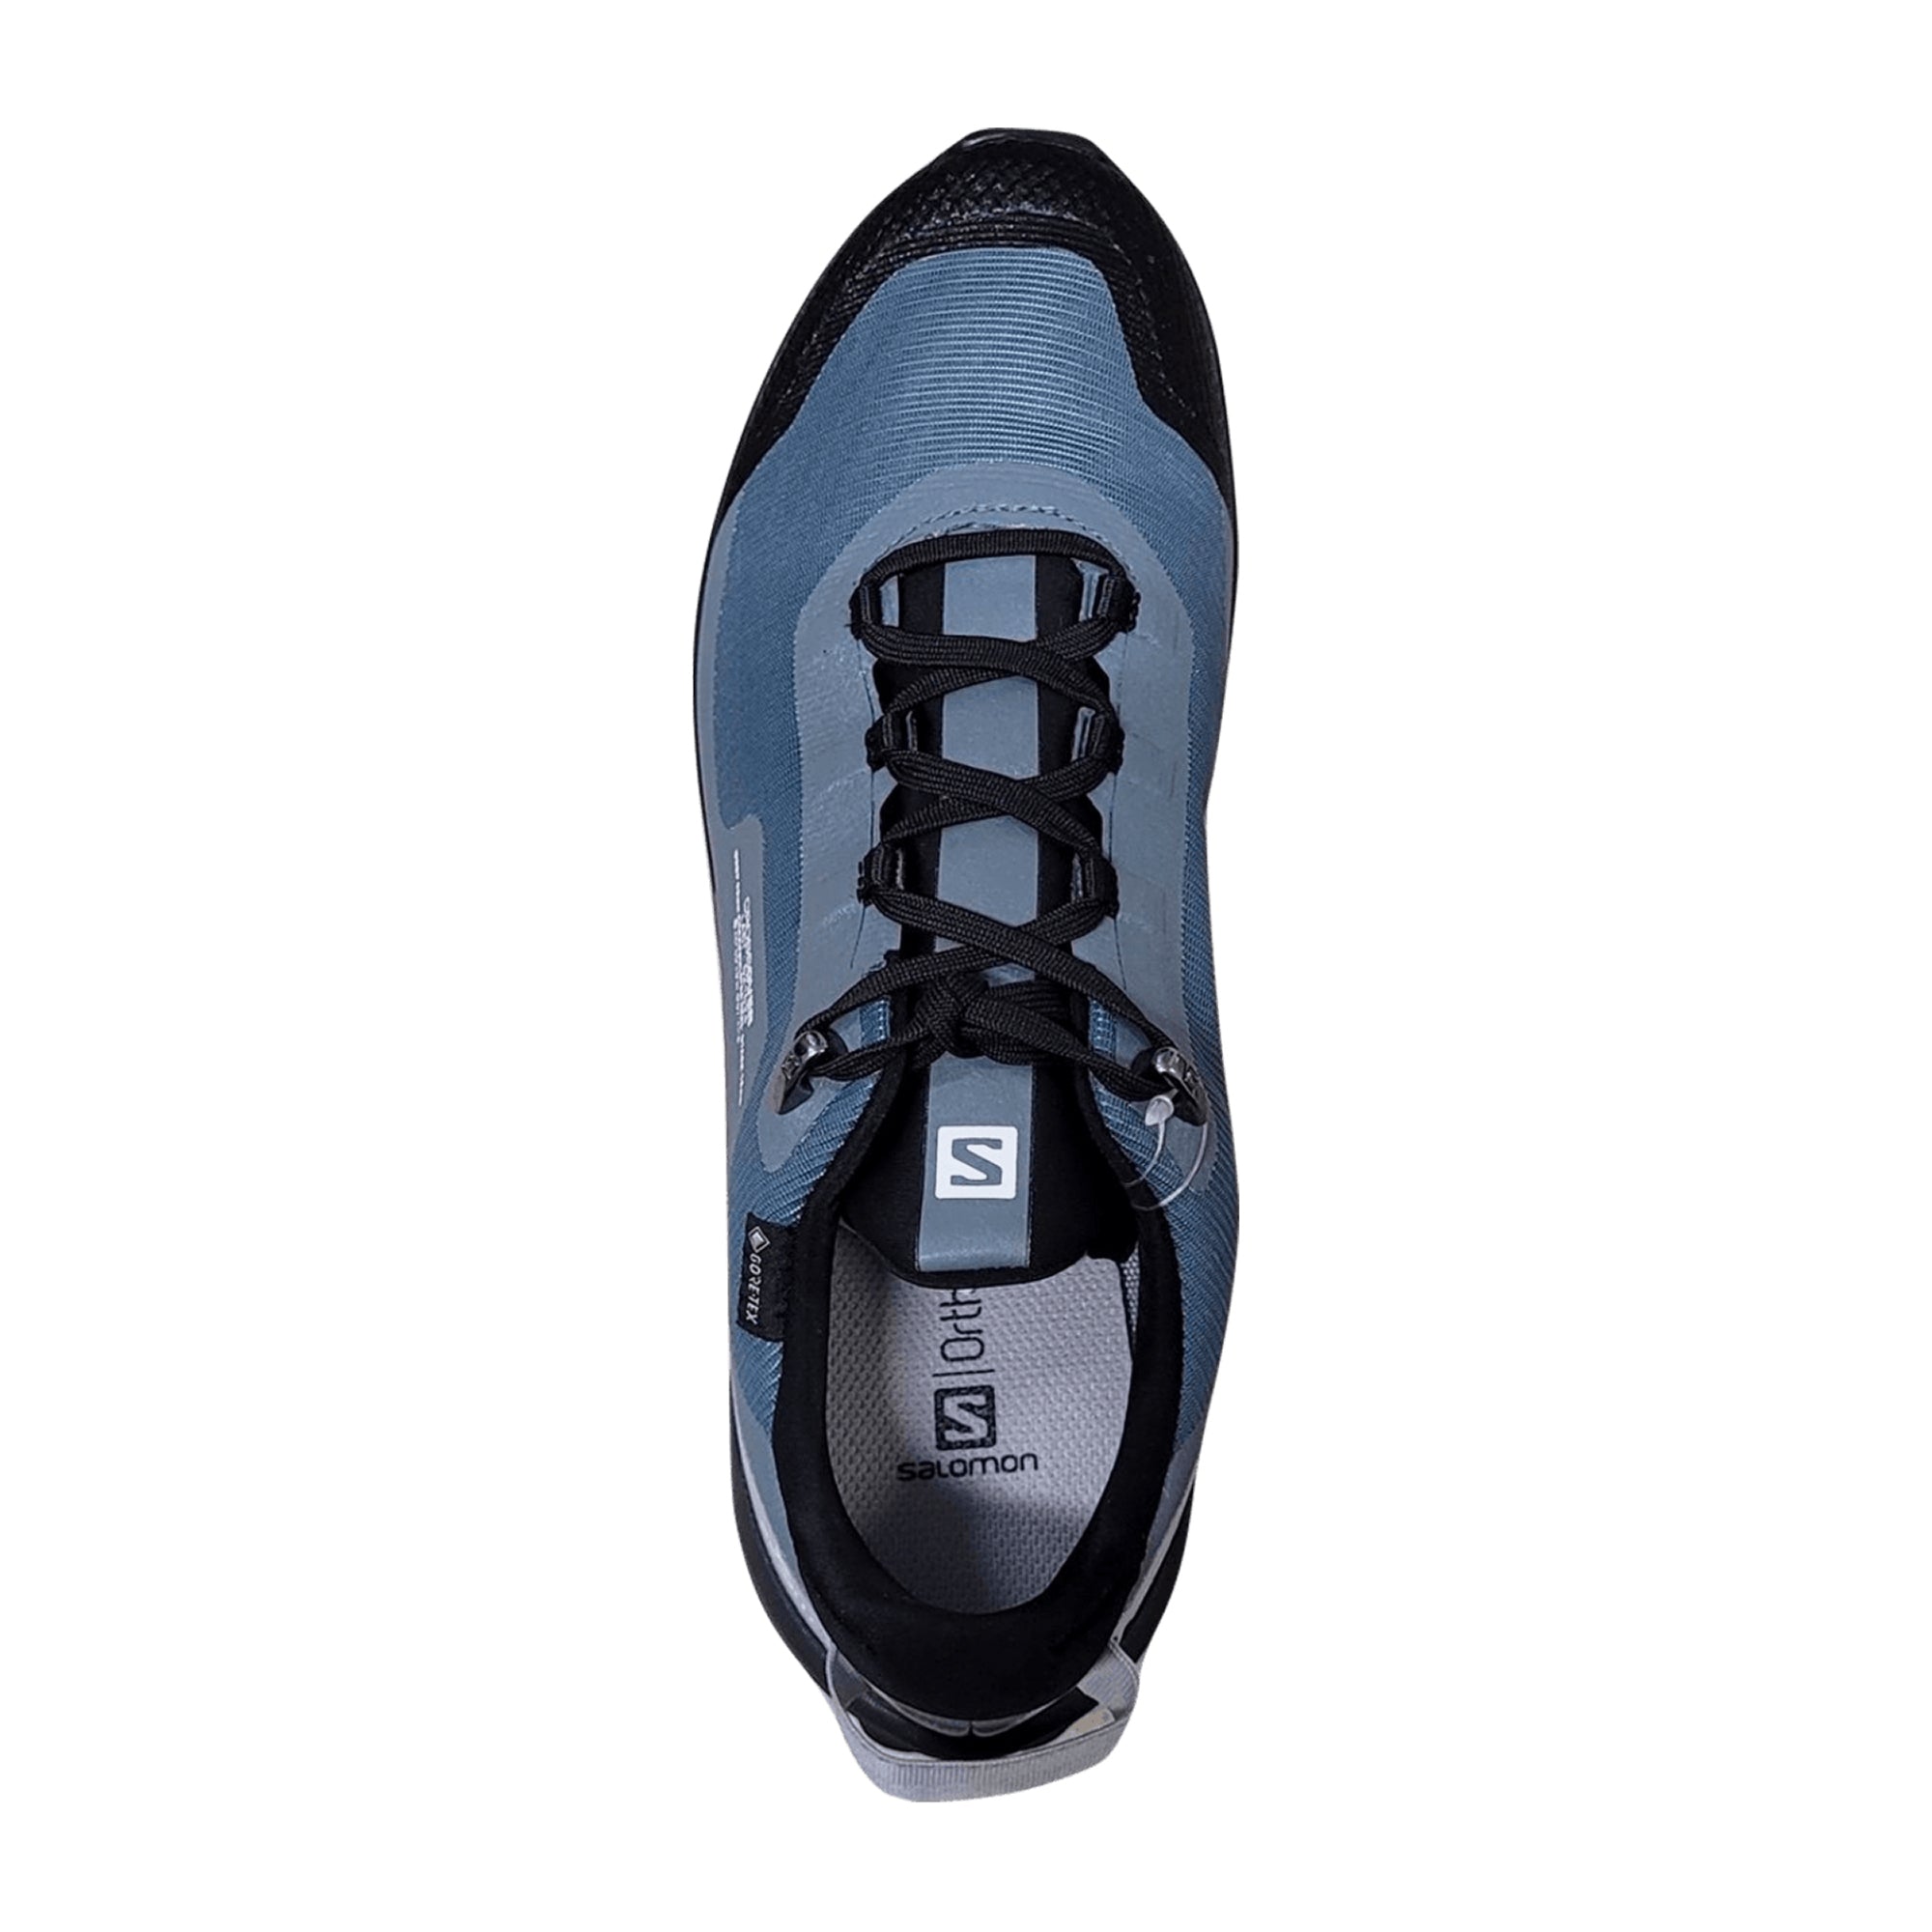 Salomon Cross Over GTX W for women, blue, shoes